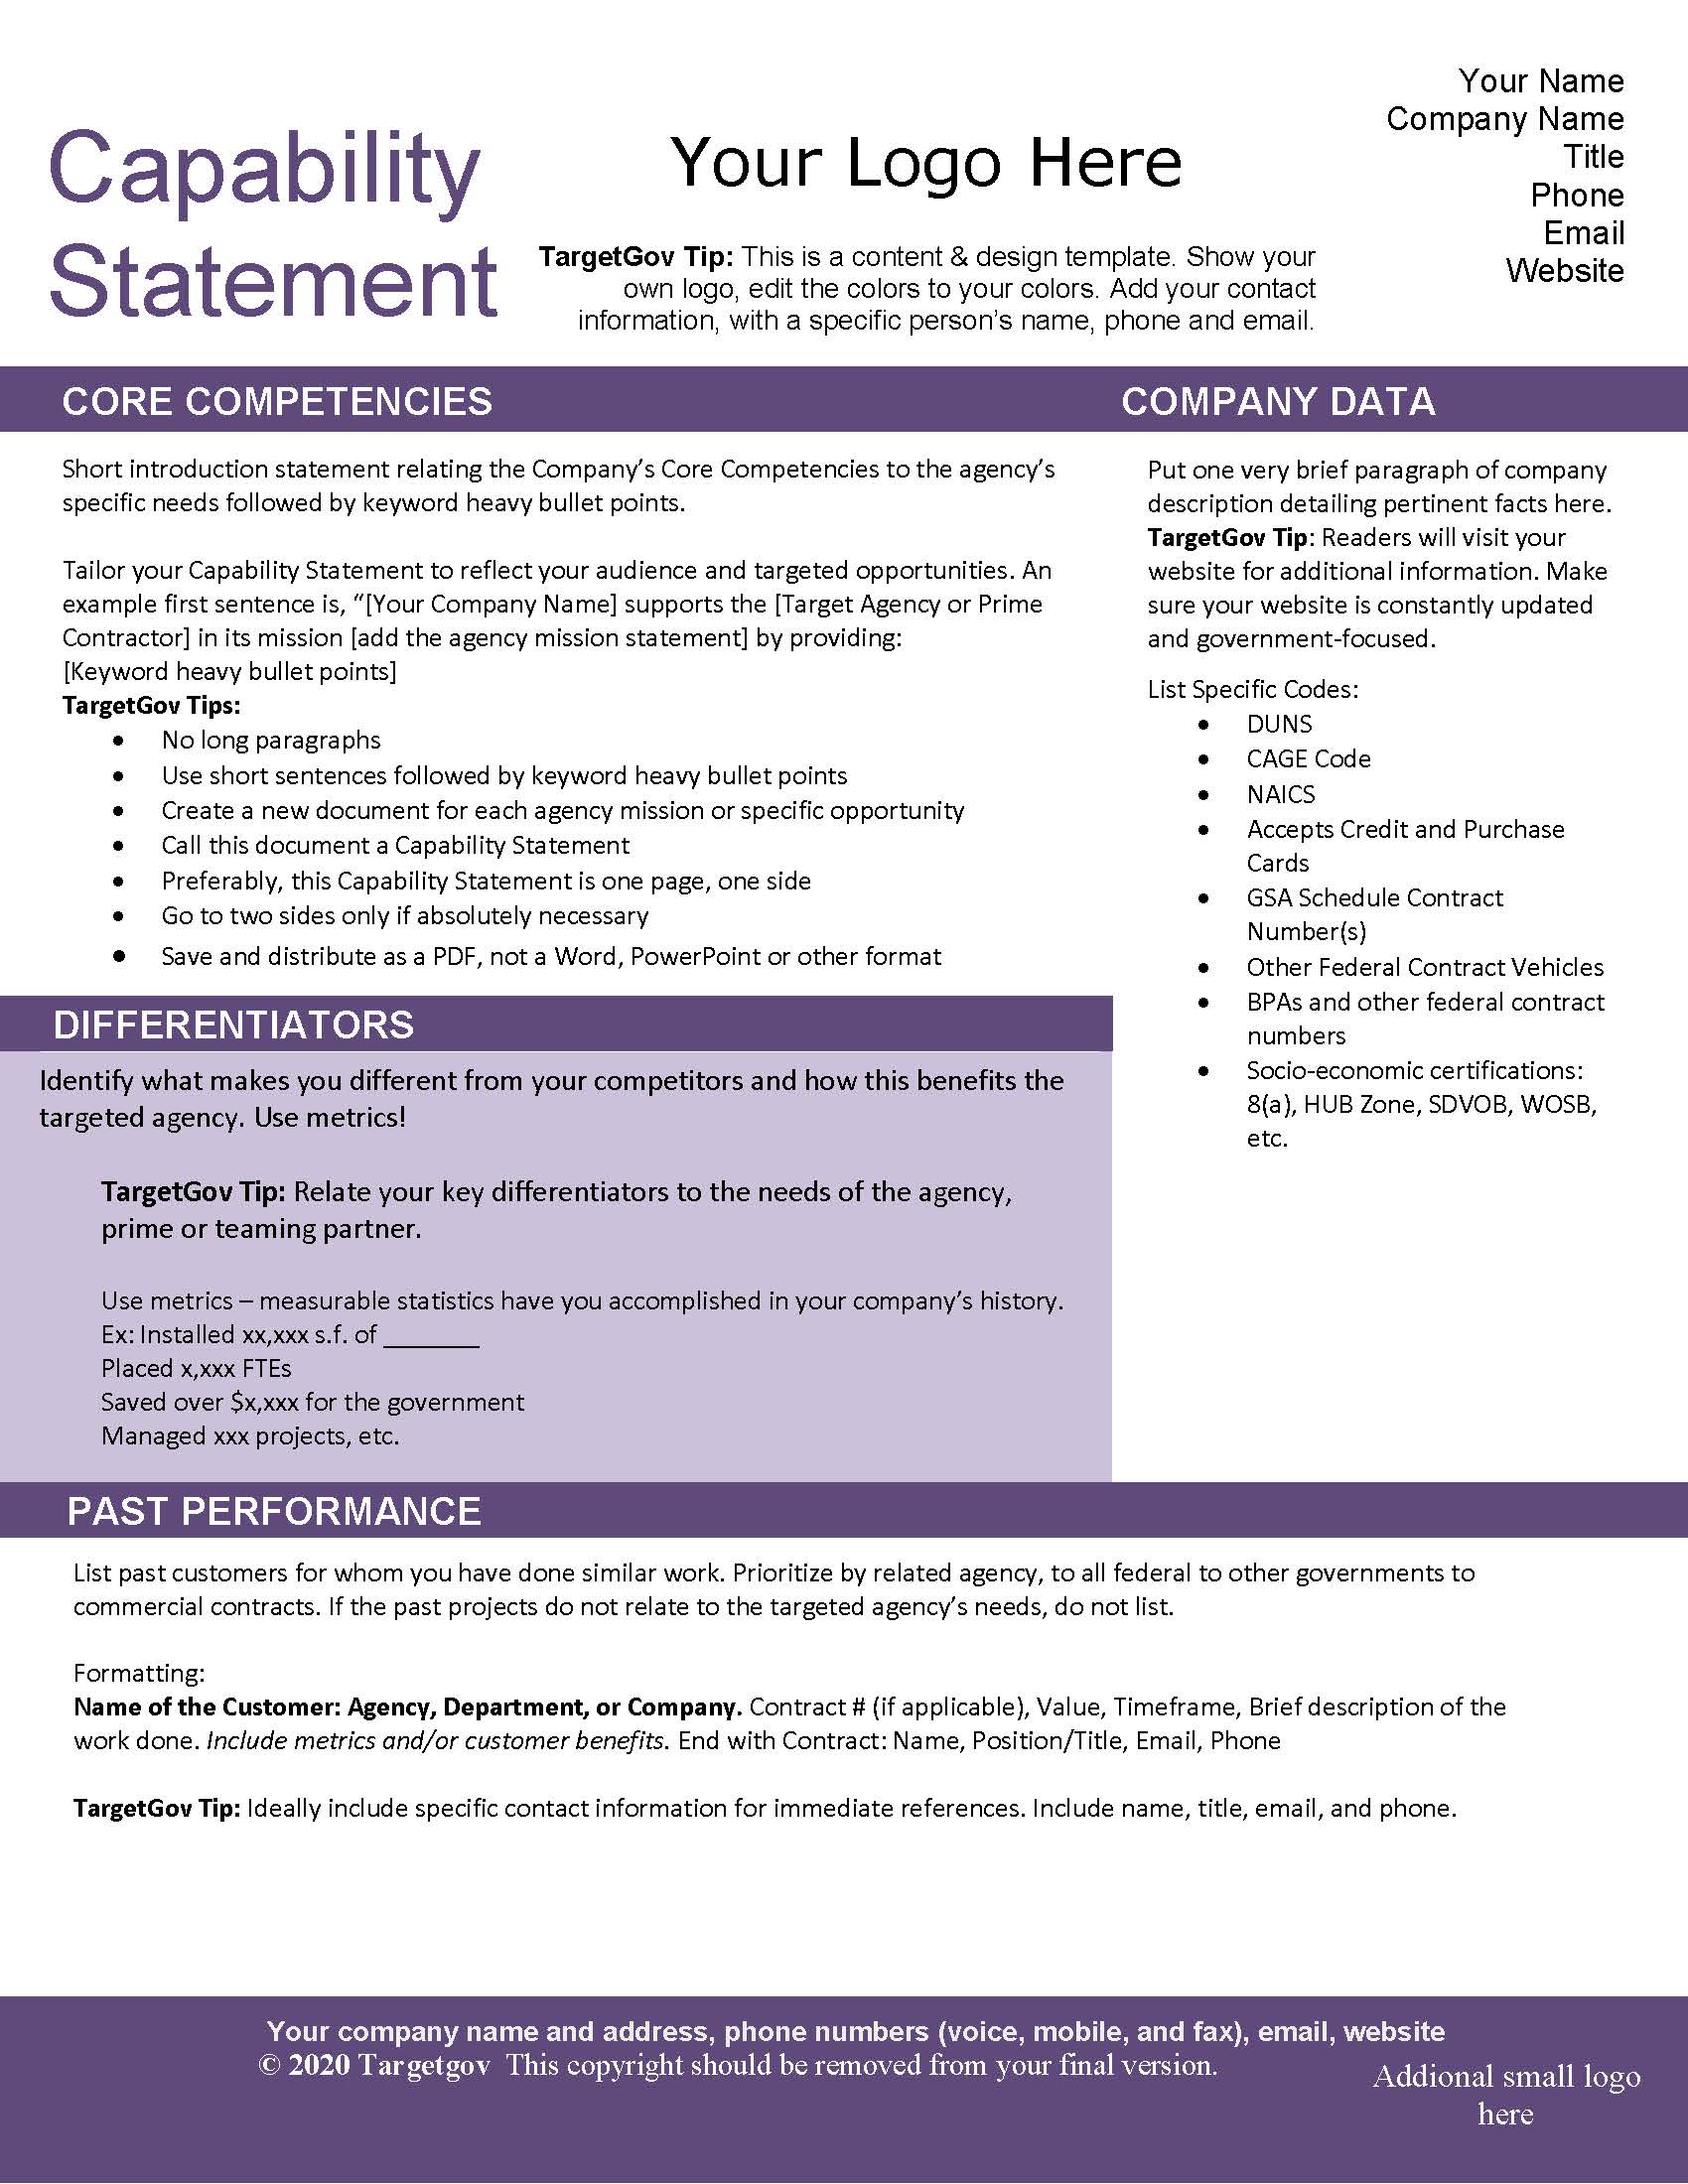 Capability Statement Editable Template - Purple Inside Capability Statement Template Word